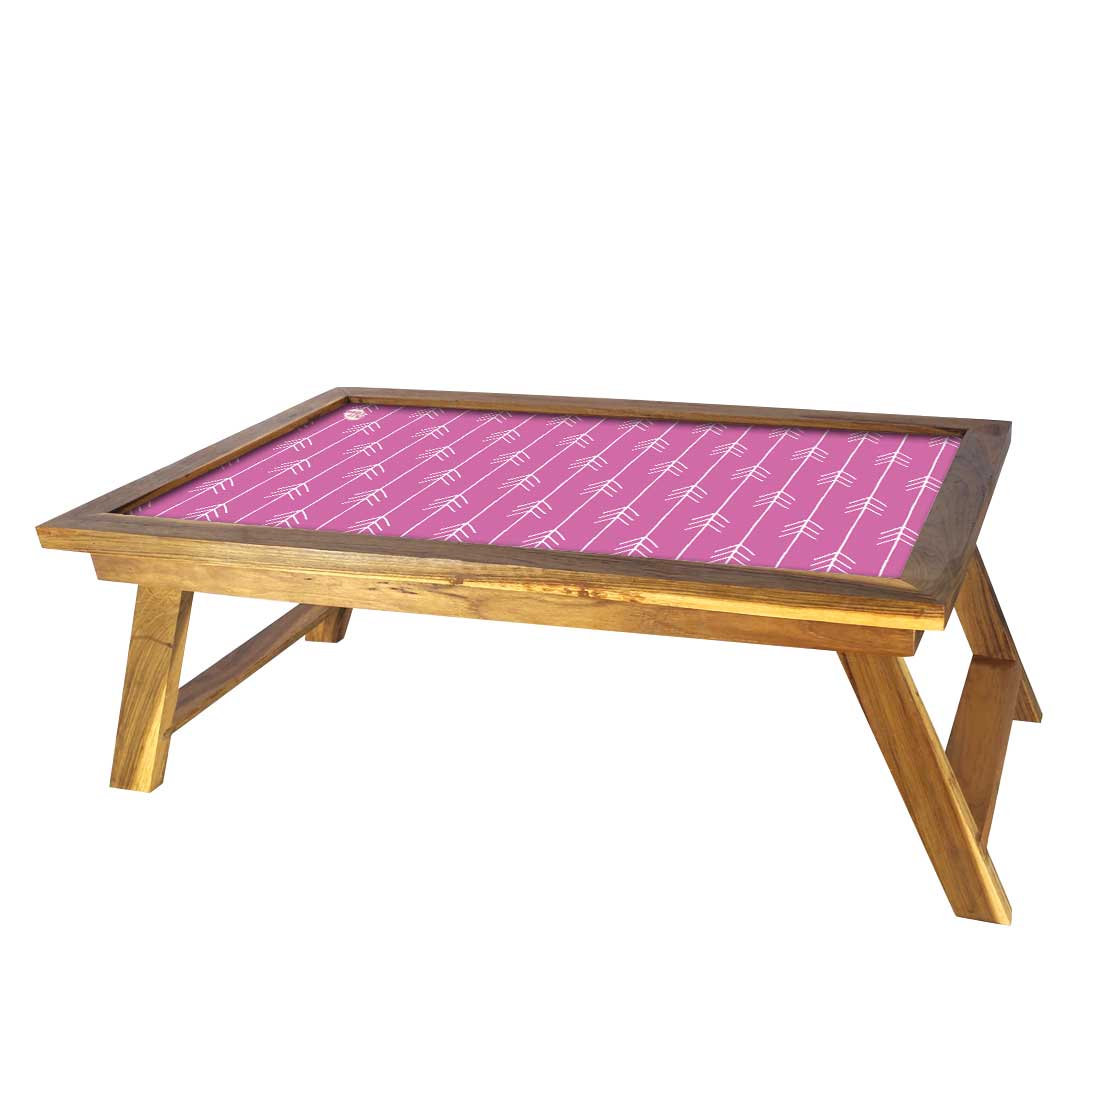 Nutcase Folding Laptop Table For Home Bed Lapdesk Breakfast Table Foldable Teak Wooden Study Desk - Arrow Ends - Pink Nutcase